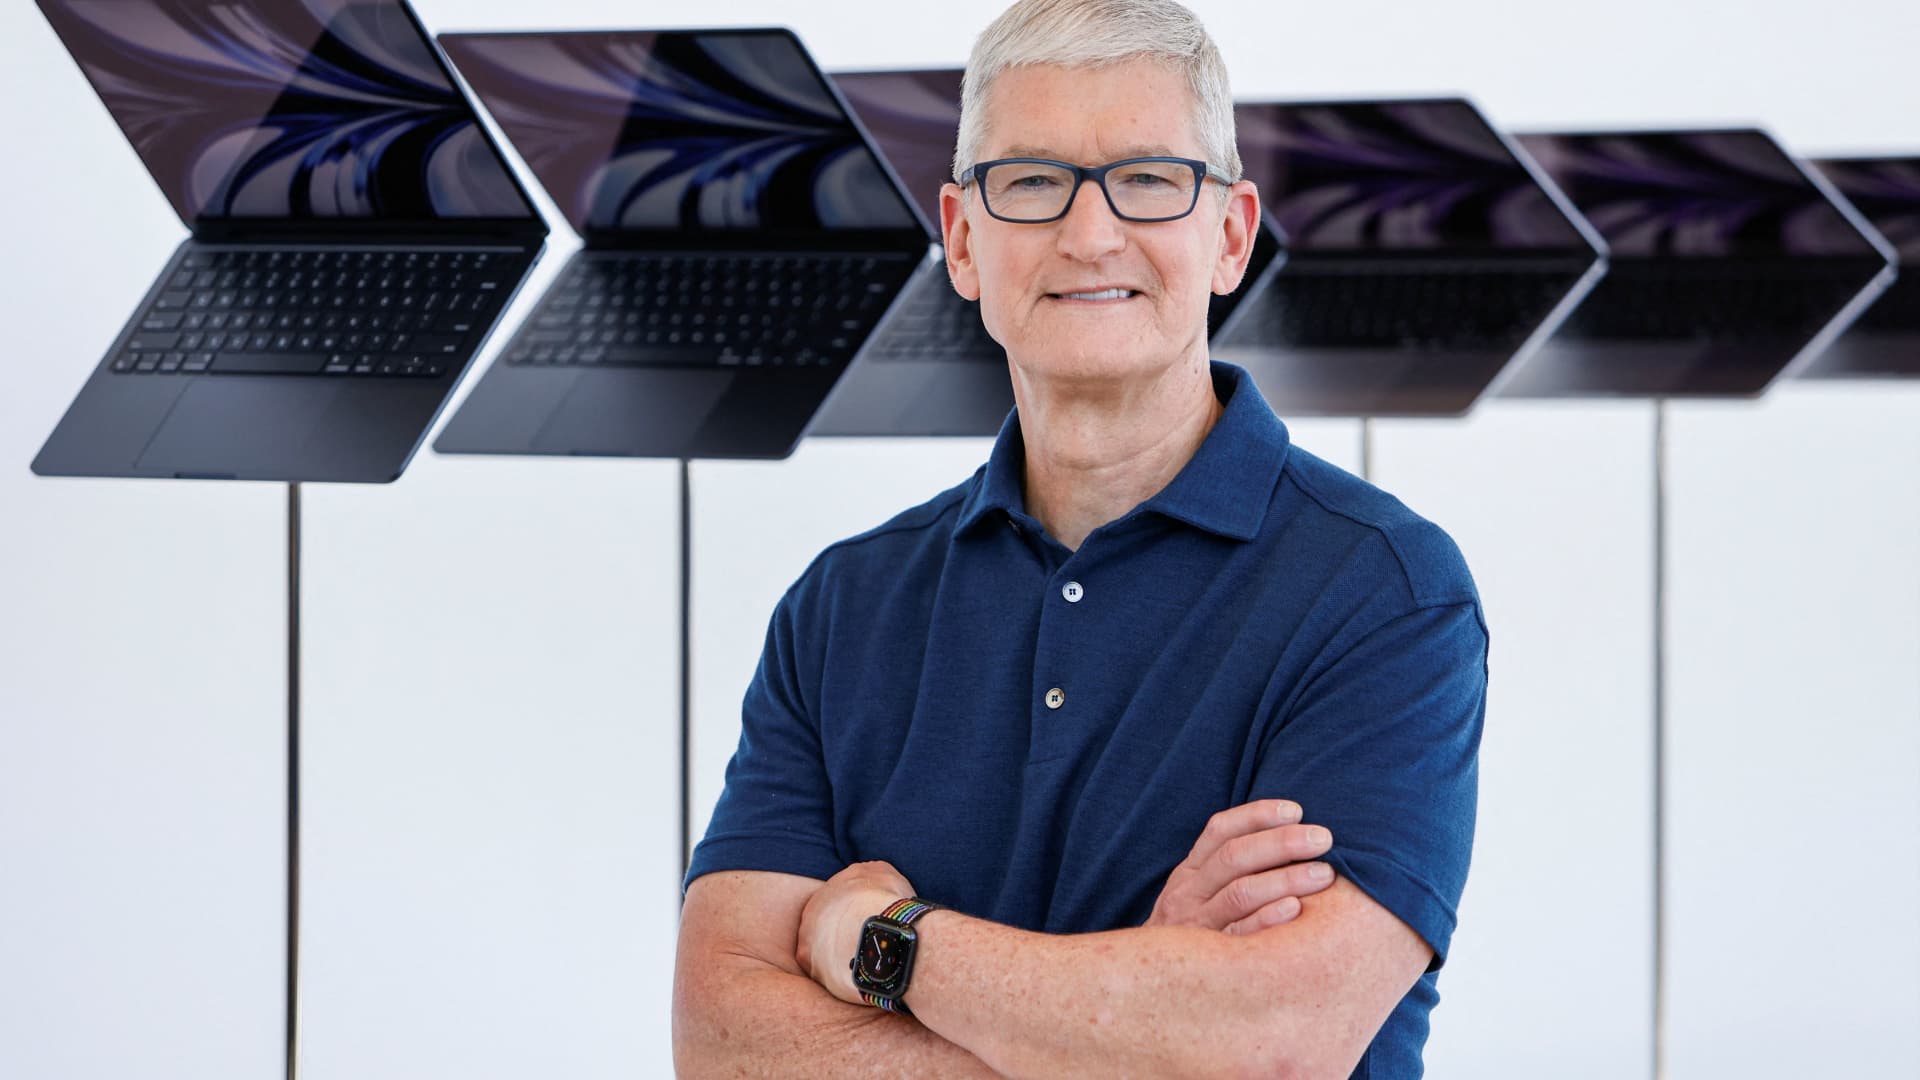 Apple will reportedly begin producing some MacBooks in Vietnam in 2023